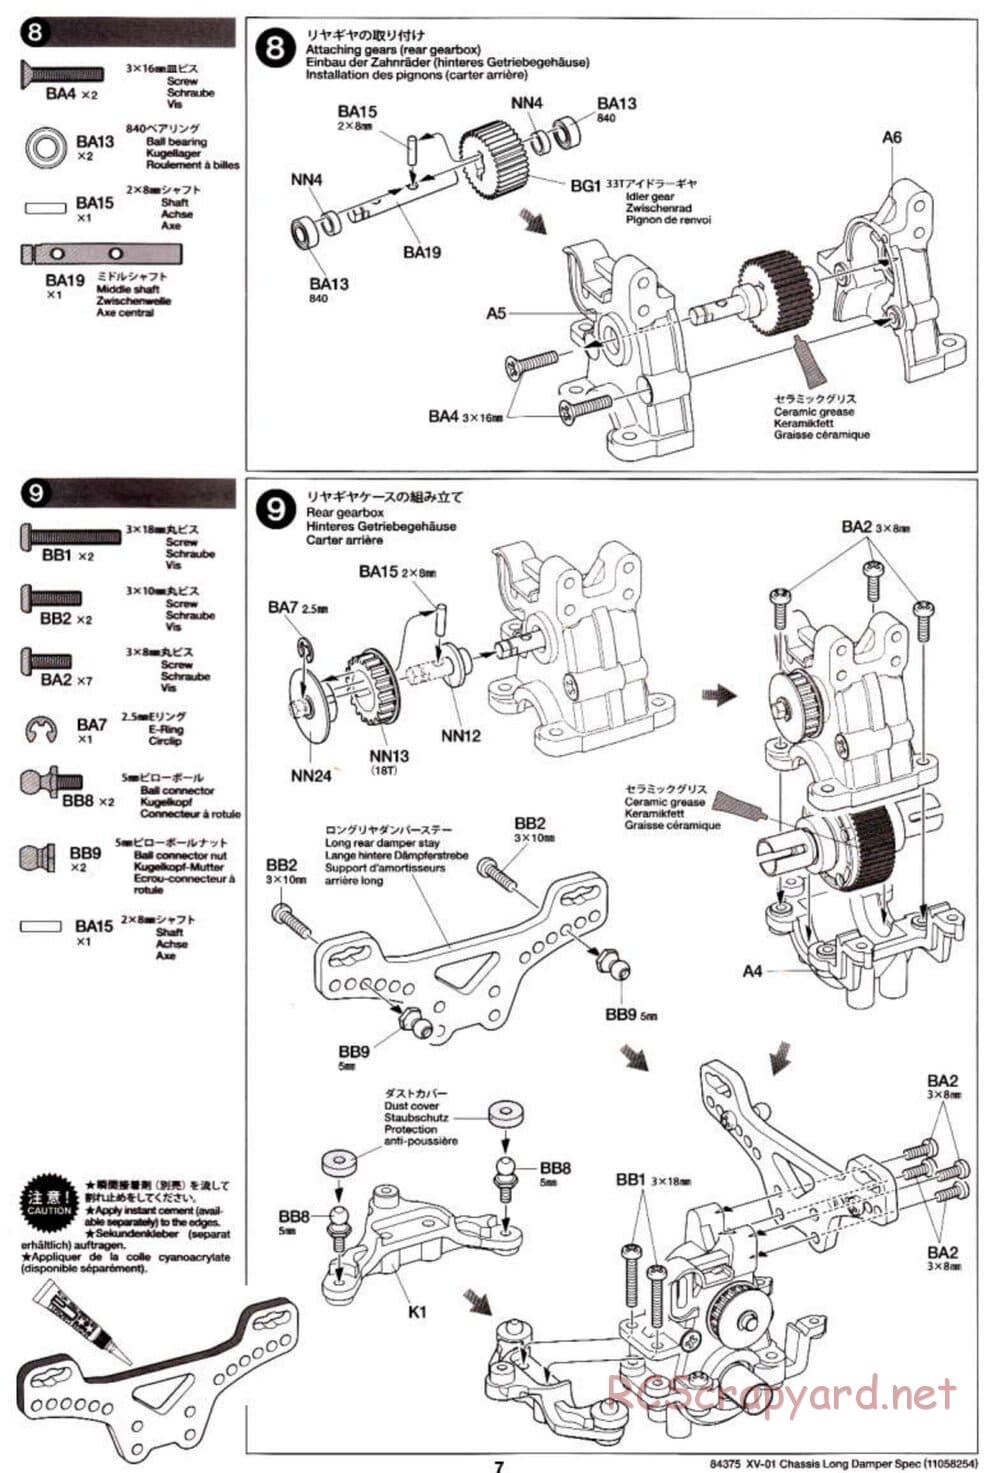 Tamiya - XV-01 Long Damper Spec Chassis - Manual - Page 7